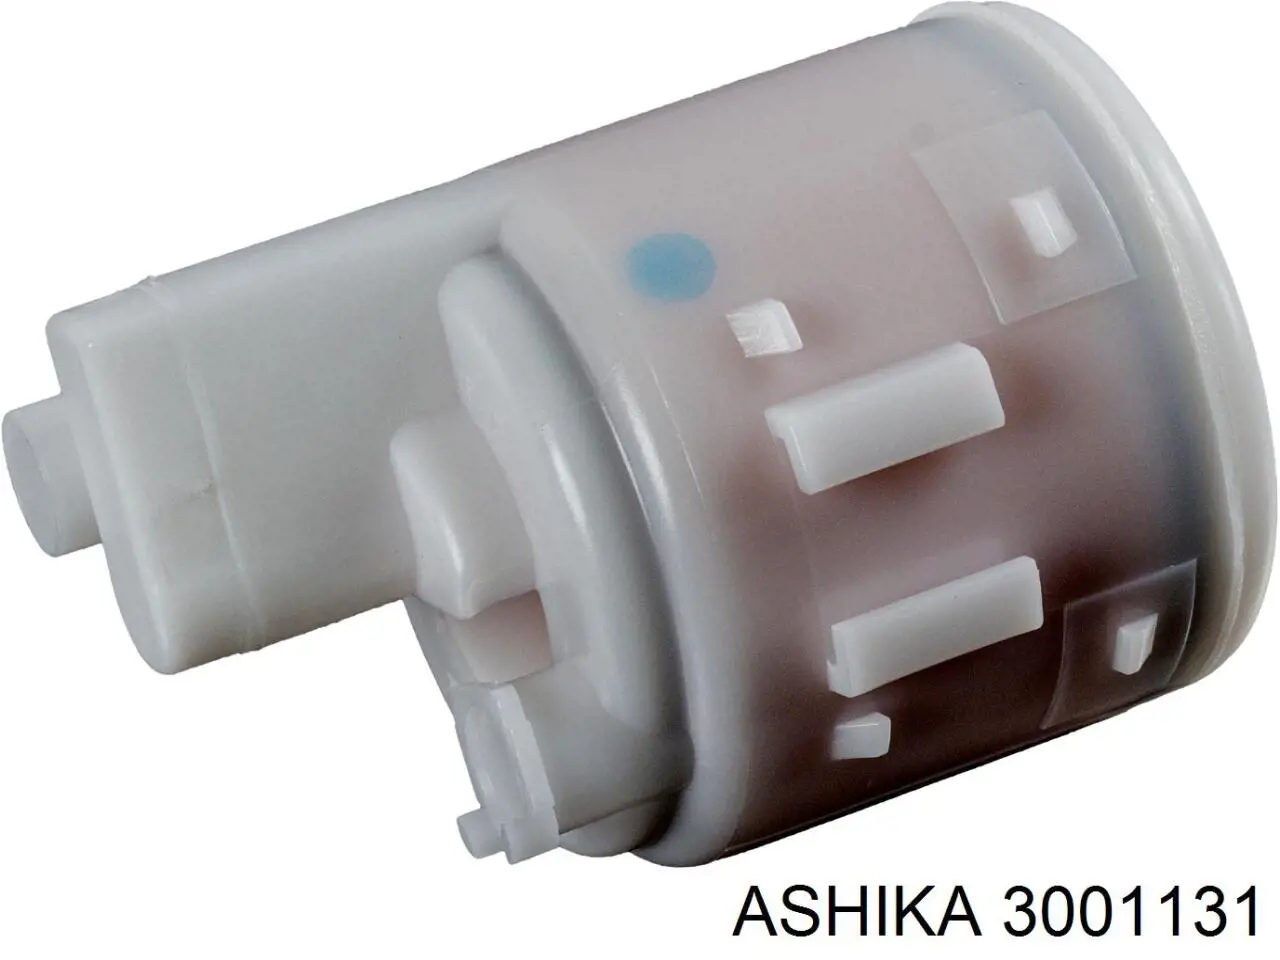 3001131 Ashika filtro de combustible